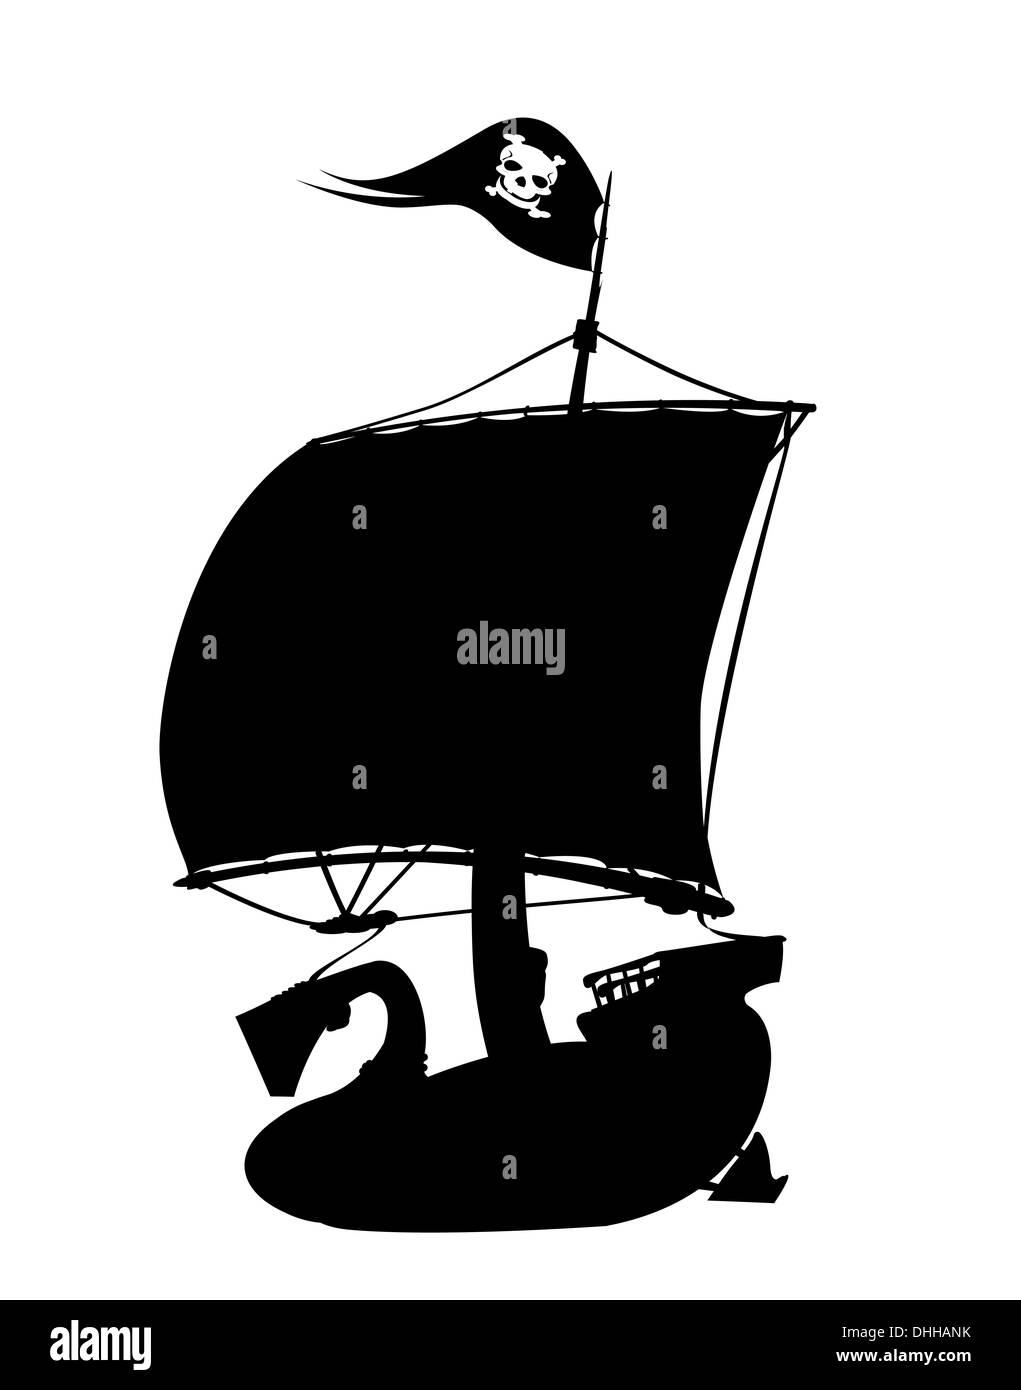 Pirate ship icon Stock Photo